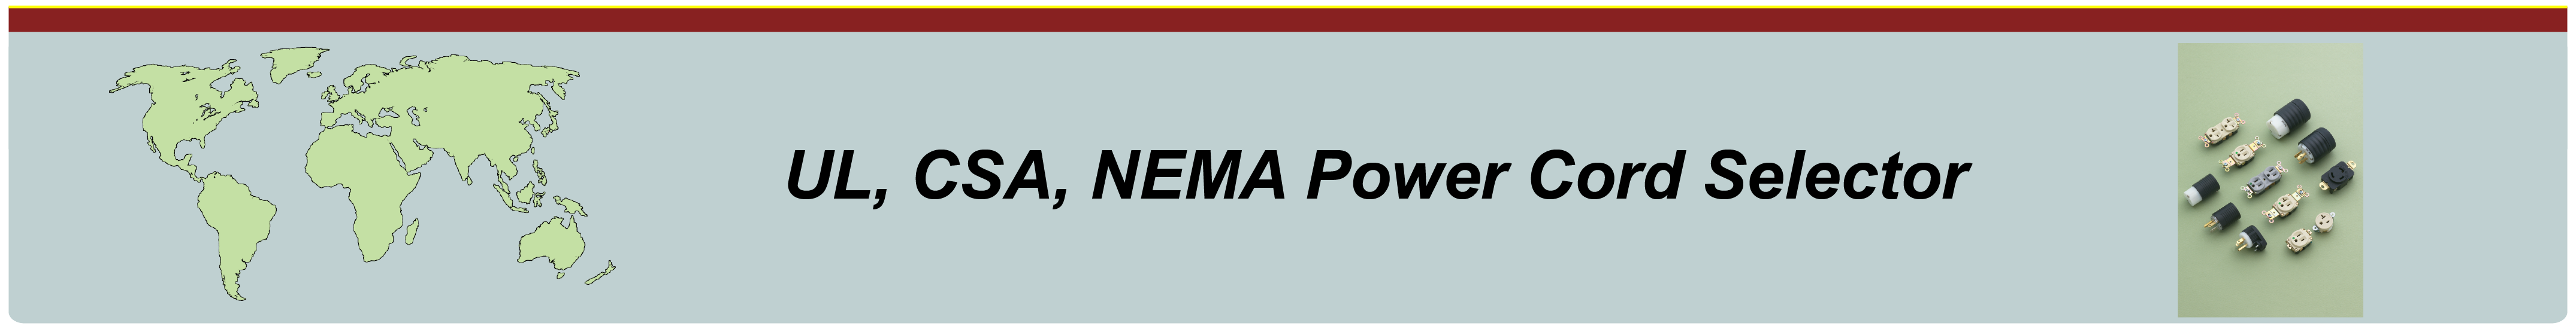 UL, CSA, NEMA Power Cord Selector